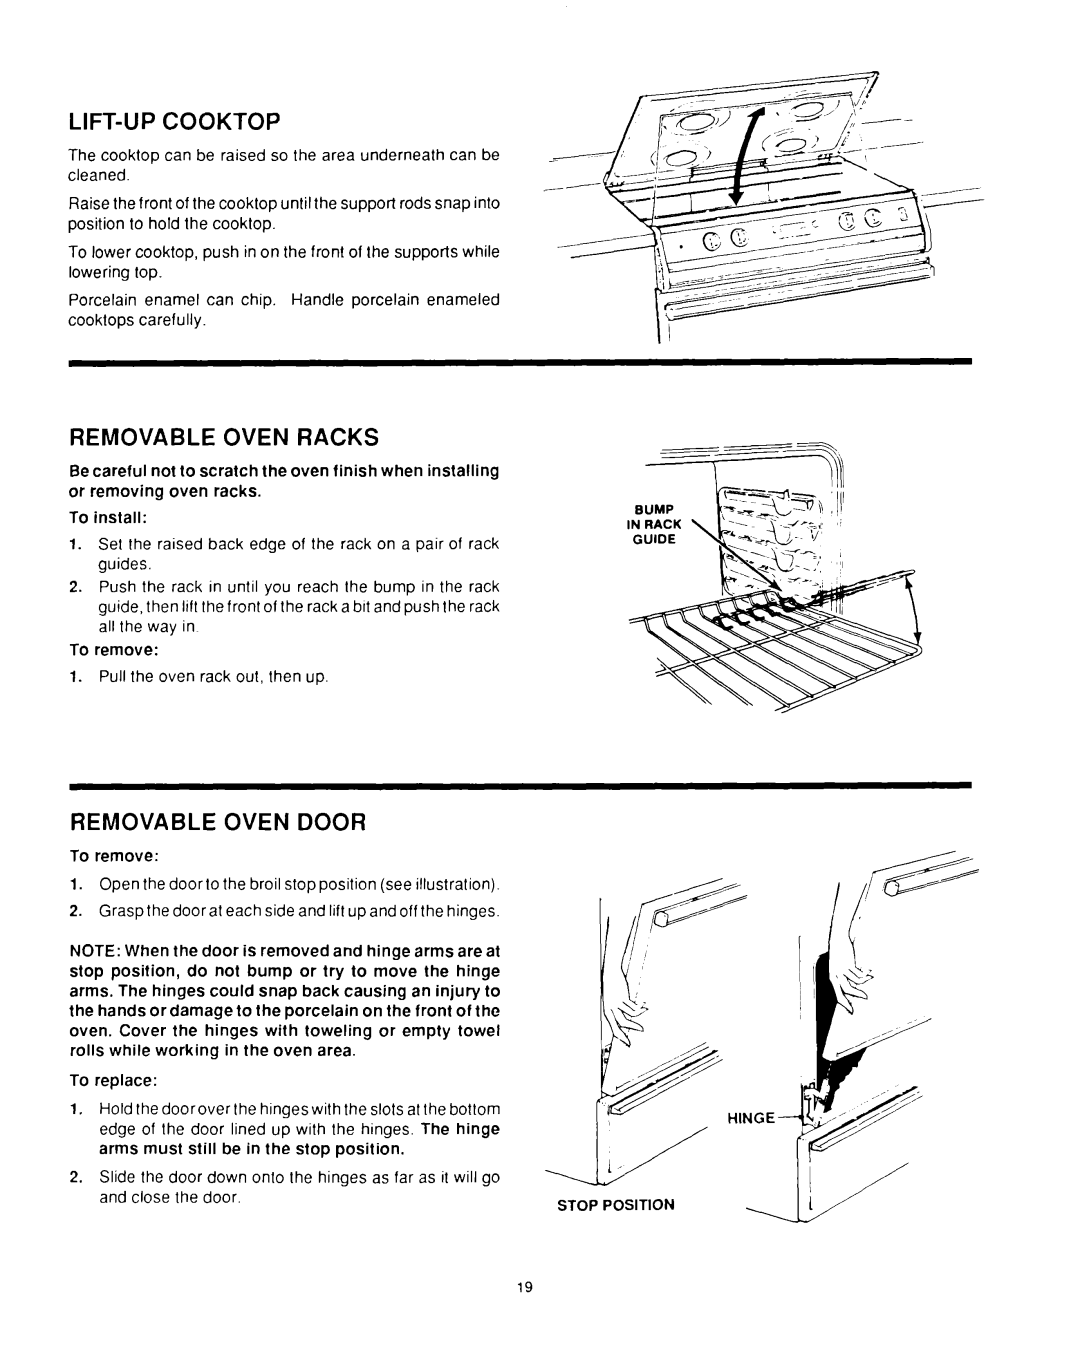 Roper D975 owner manual Lift-Upcooktop, Removable Oven Racks, Removable Oven Door 